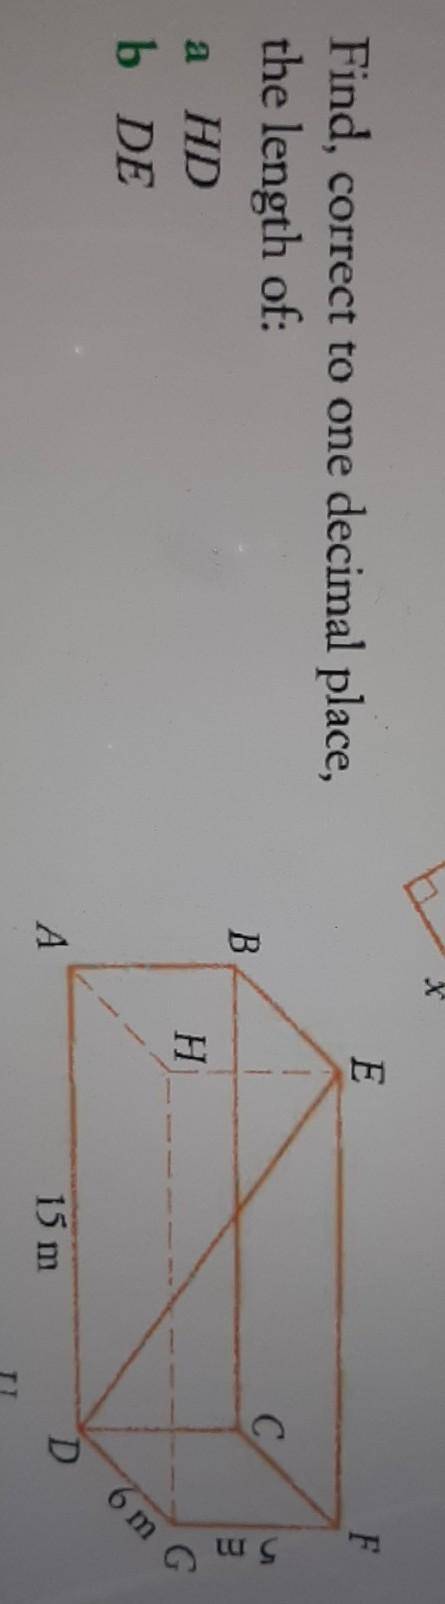 Solve using Pythagoras Theorem (please)